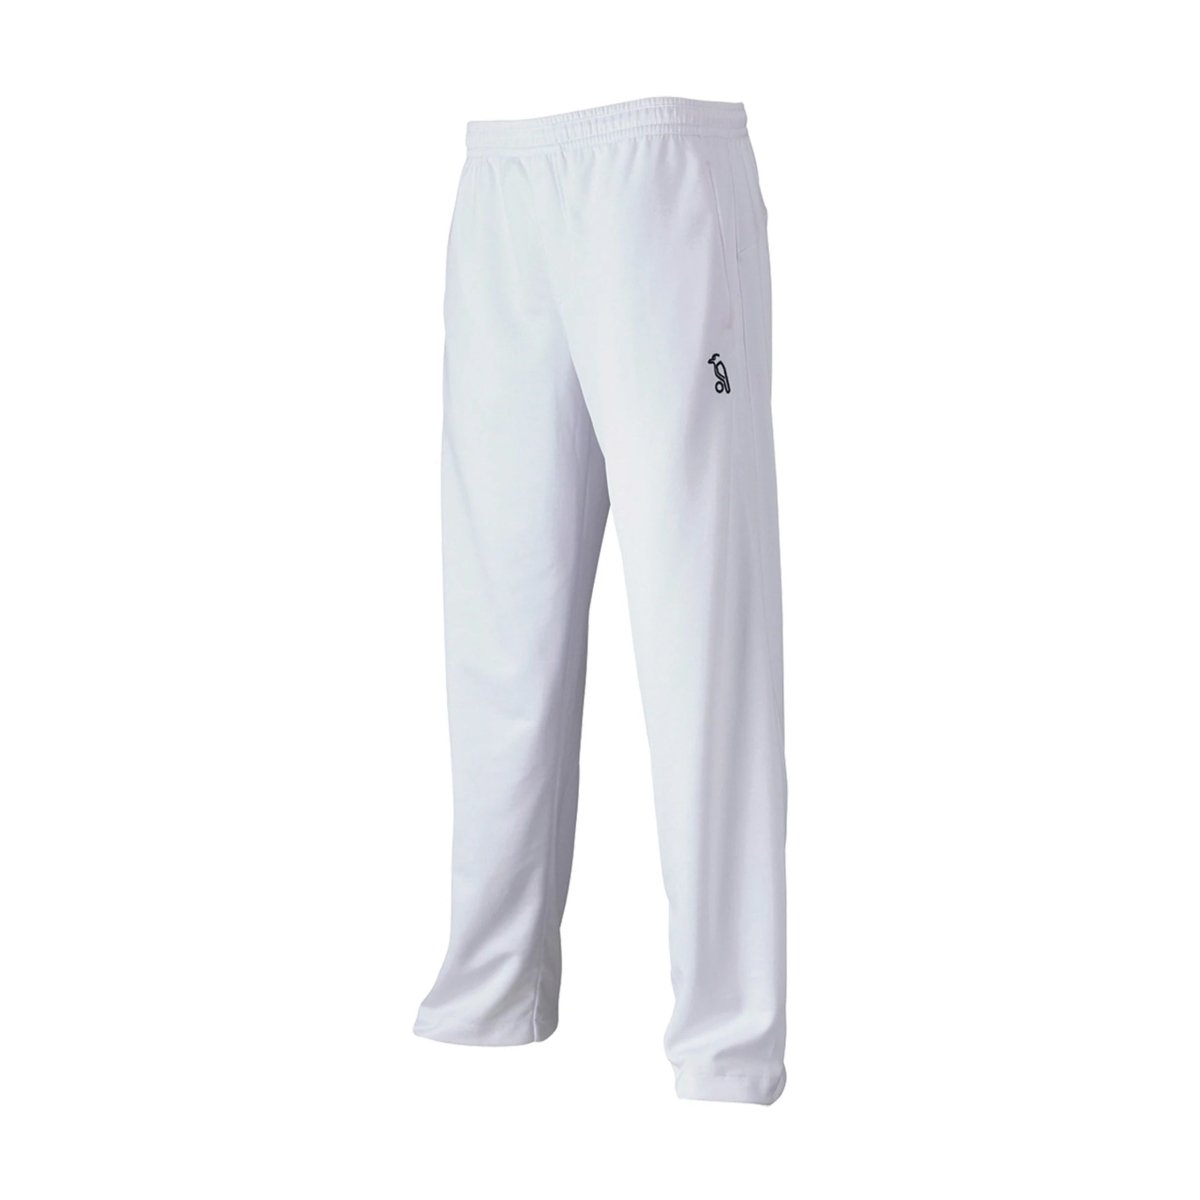 Kookaburra Pro Active Cricket Pants White.